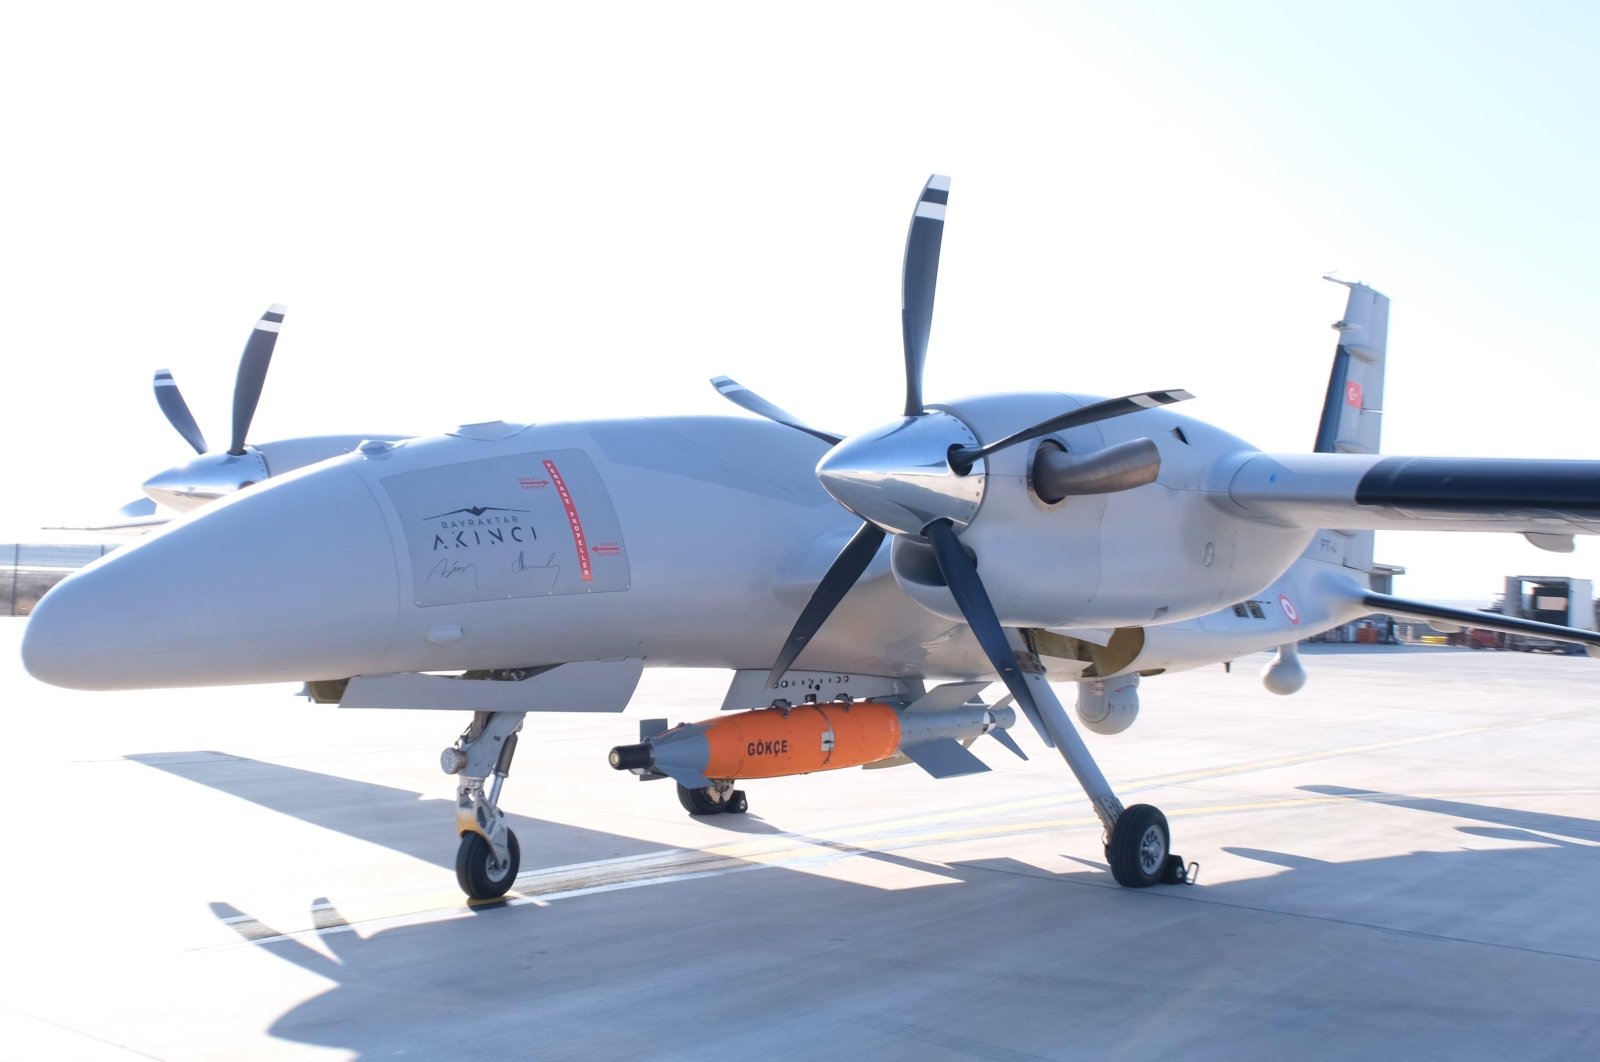 The Bayraktar Akinci drone with Gokce